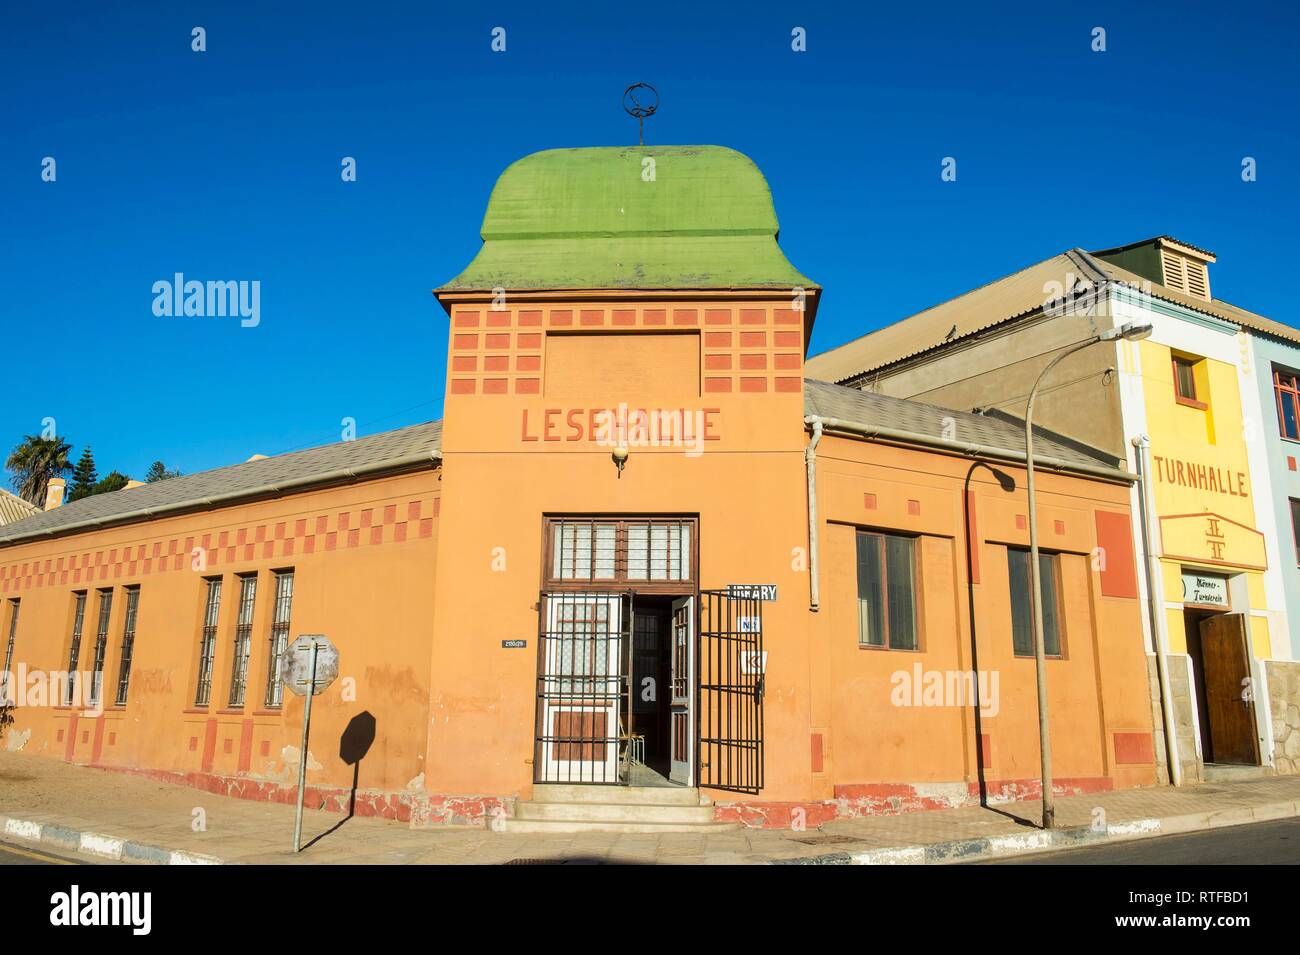 Casa colonial casa alemana, sala de lectura, Lesehalle, Lüderitz, Namibia Foto de stock